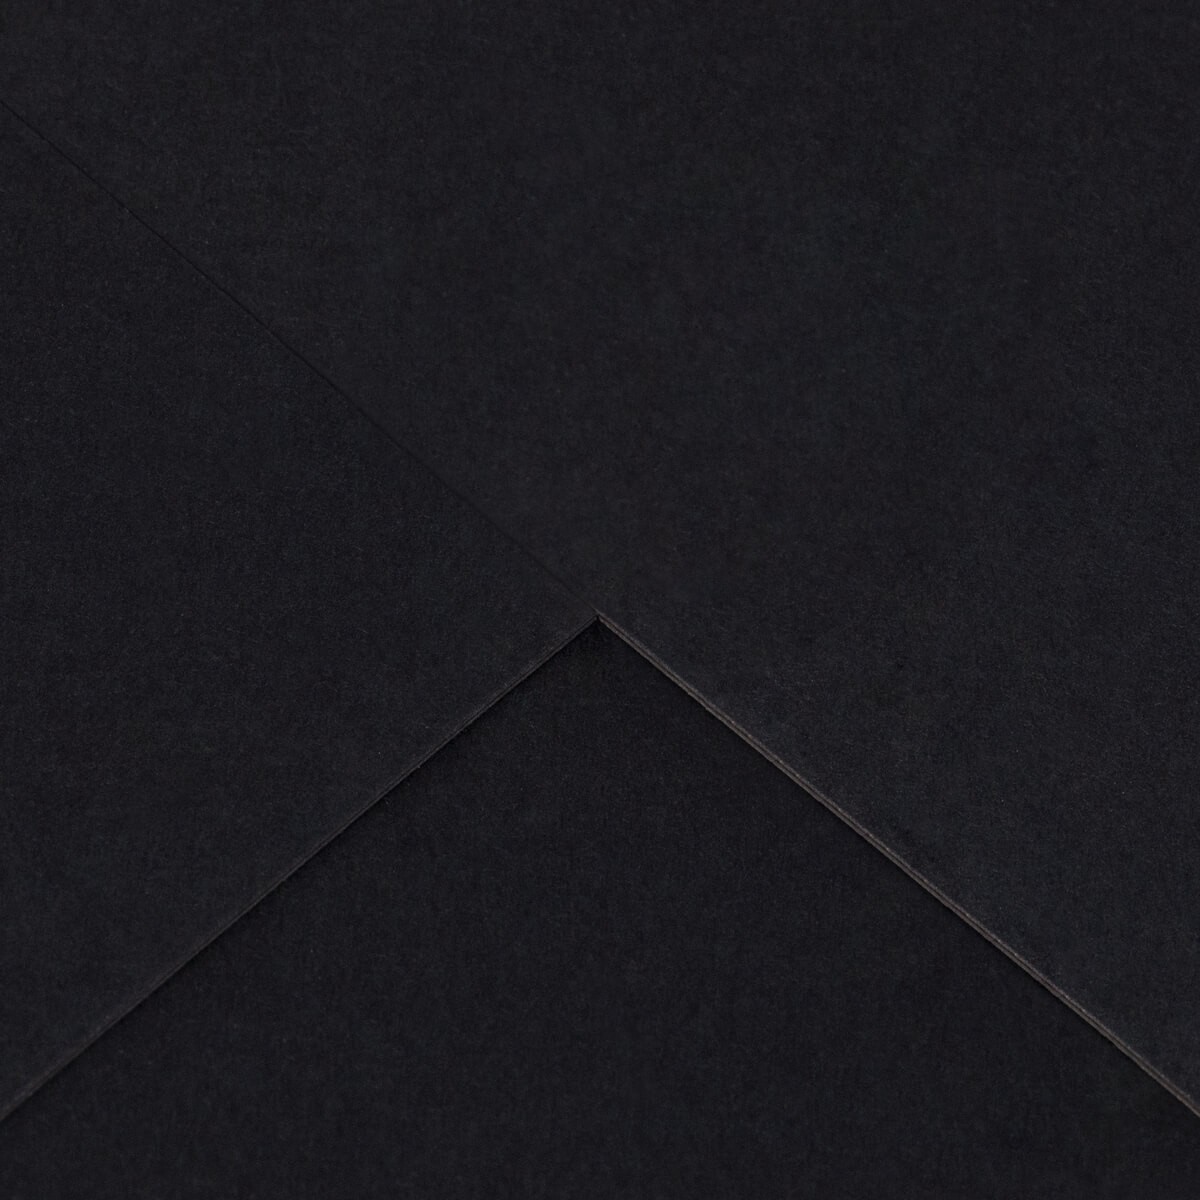 Burano black cardboard